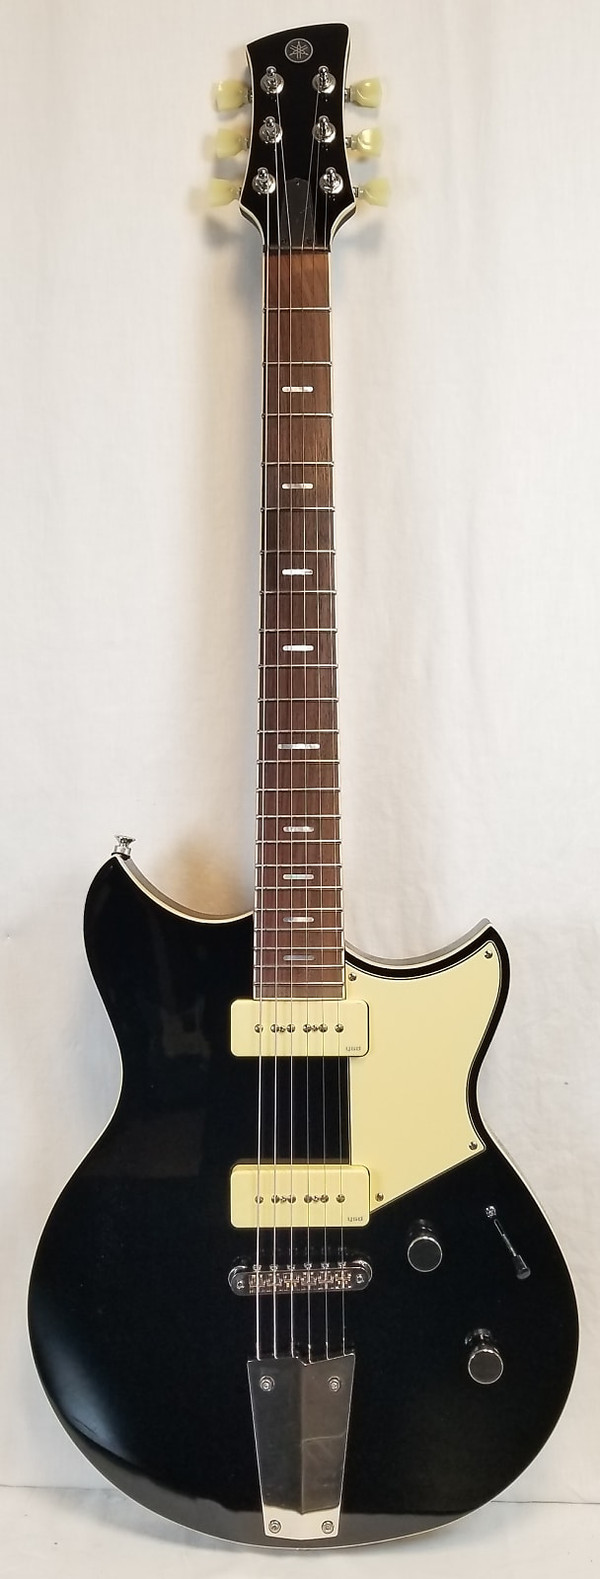 Yamaha RSS02T Revstar Standard Electric Guitar, P90 Style Pickups, Black, W/ Bag